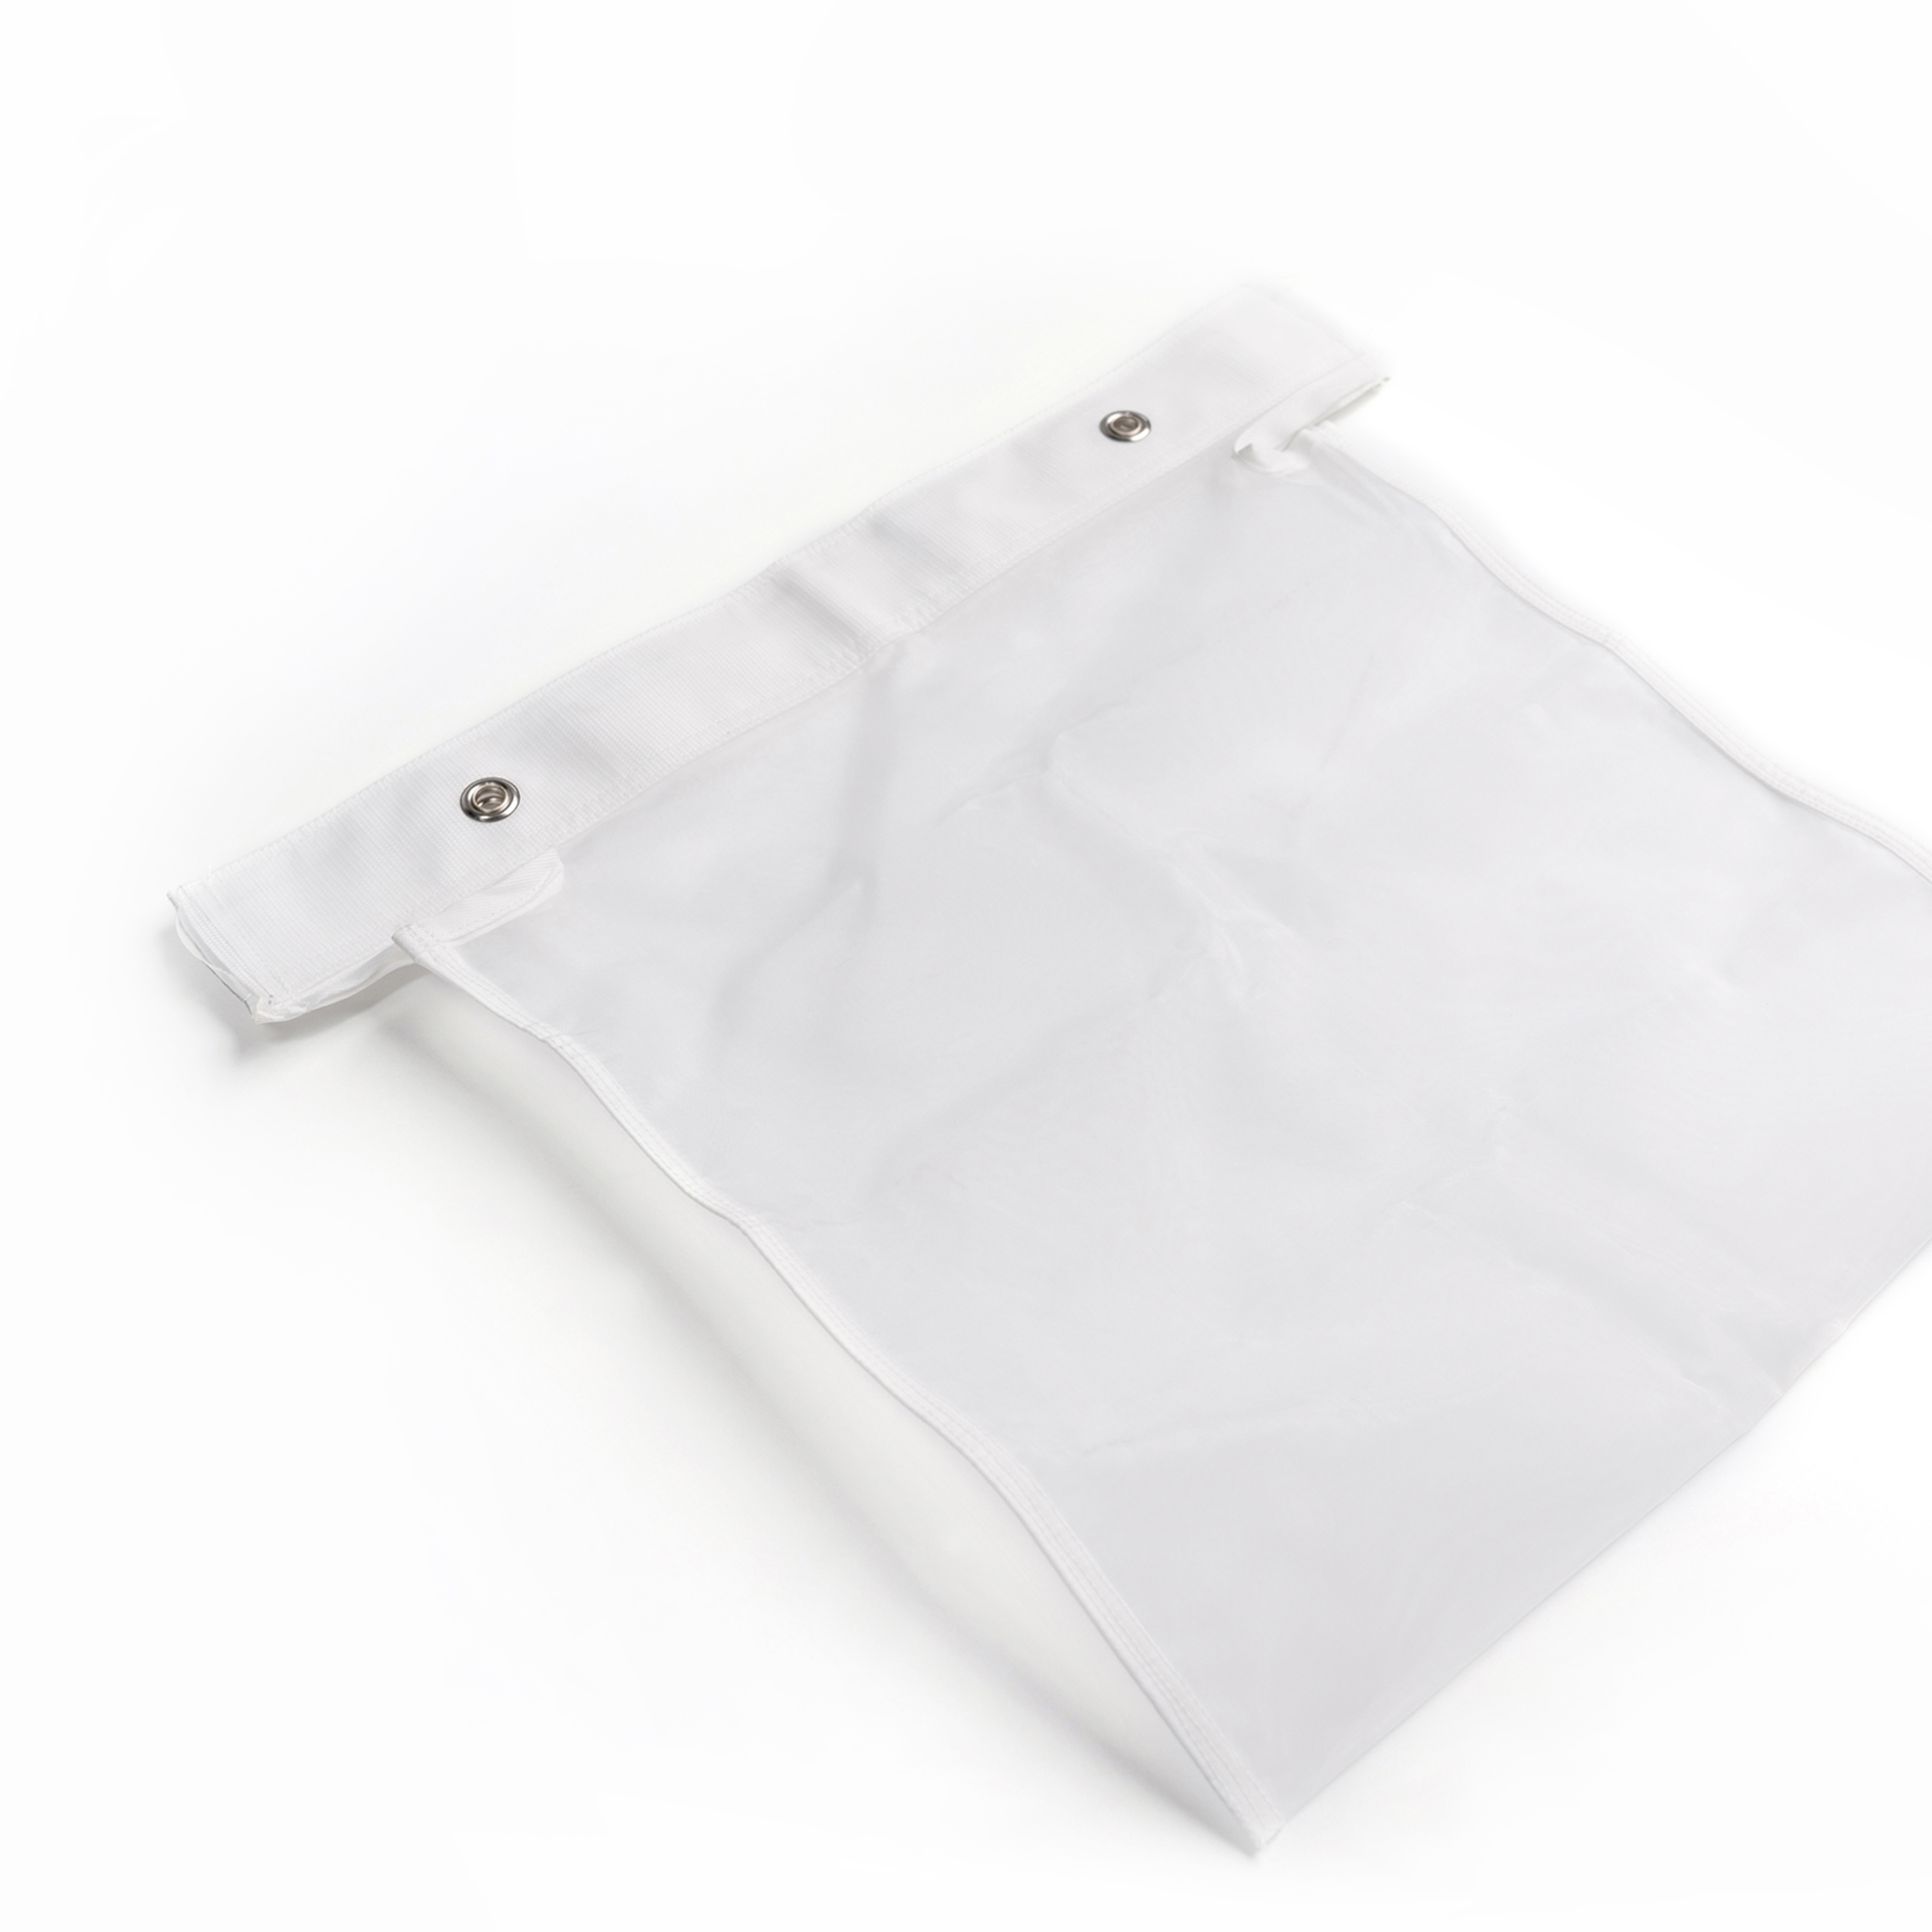 Press Bag - Monofilament "Nut Milk Bag" - 5 Pack